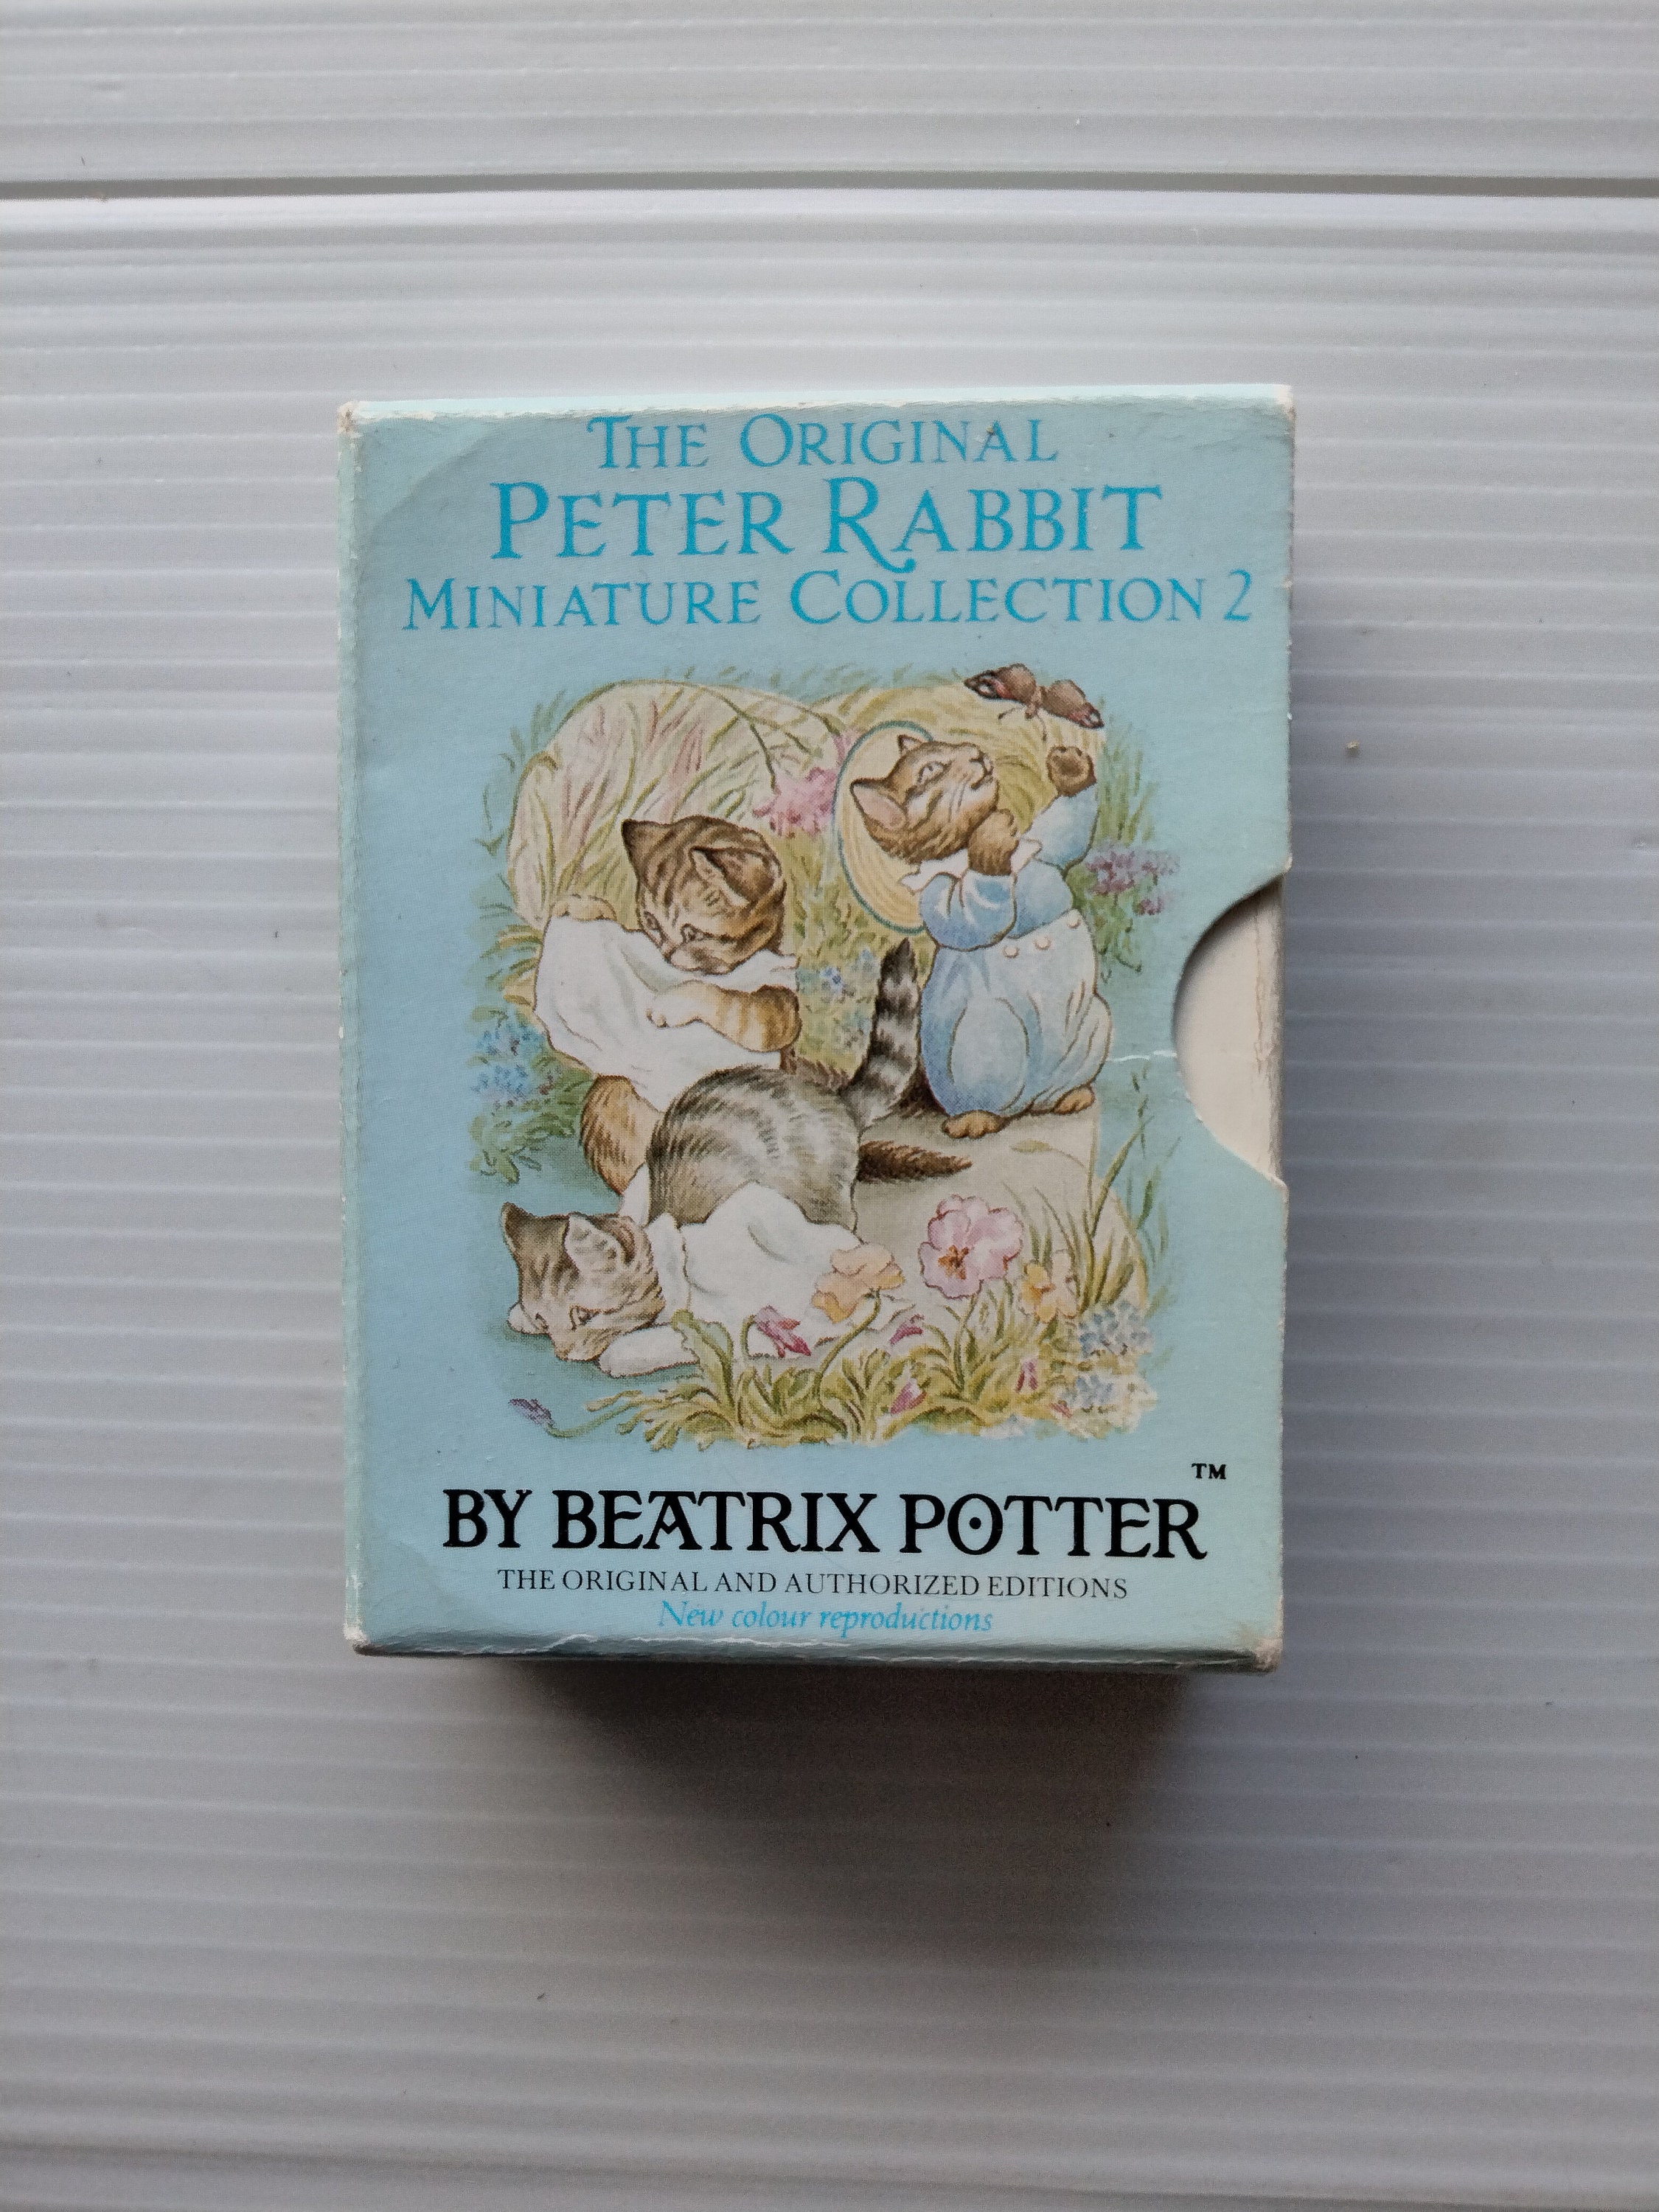 Steiff]--[Potter], Peter Rabbit Doll, [c.1909], English Literature,  History, Children's Books and Illustrations, Books & Manuscripts